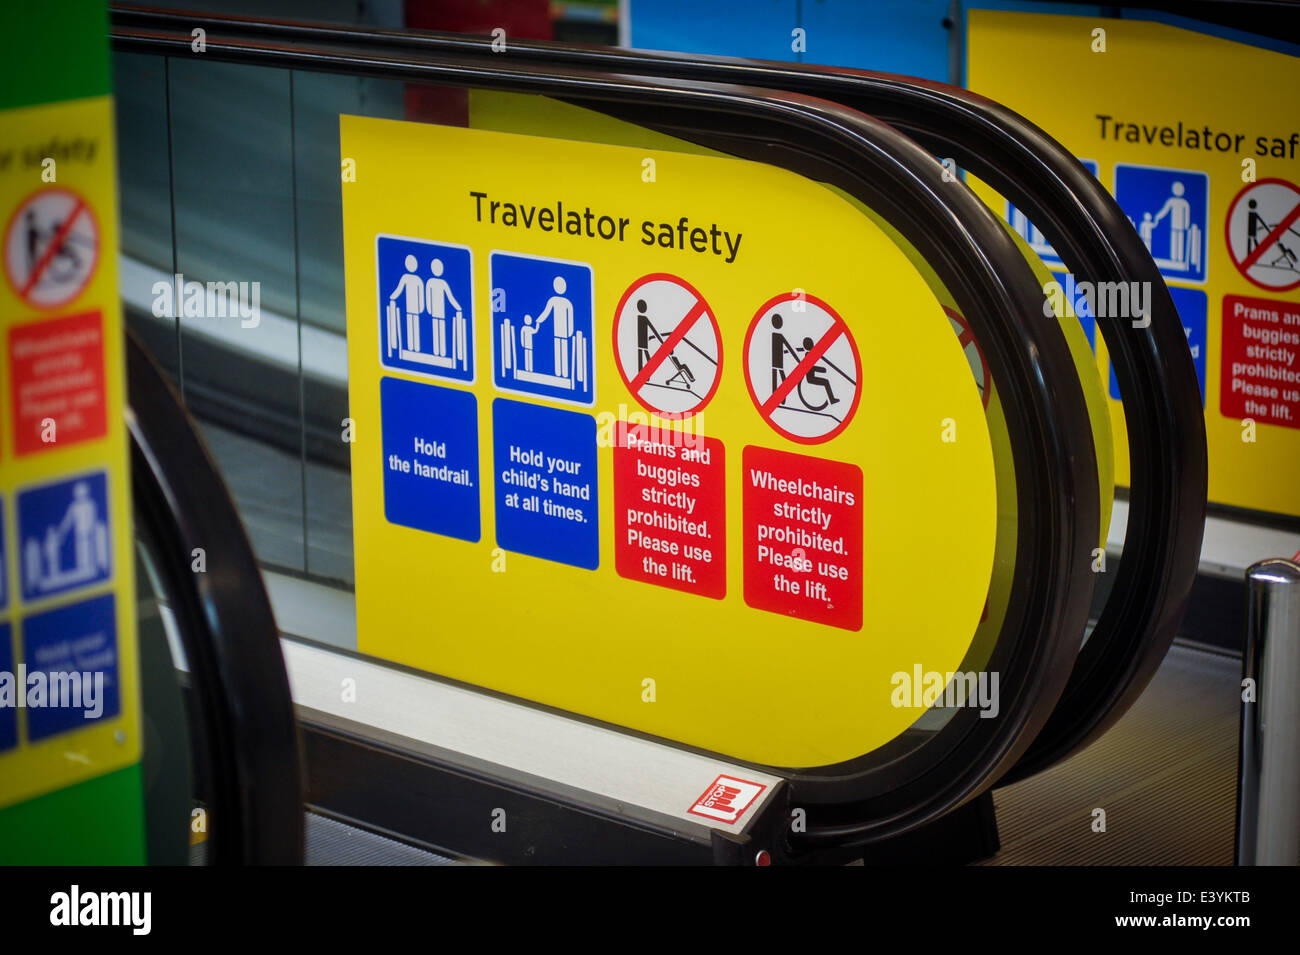 hypermarket travelator safety sign Stock Photo